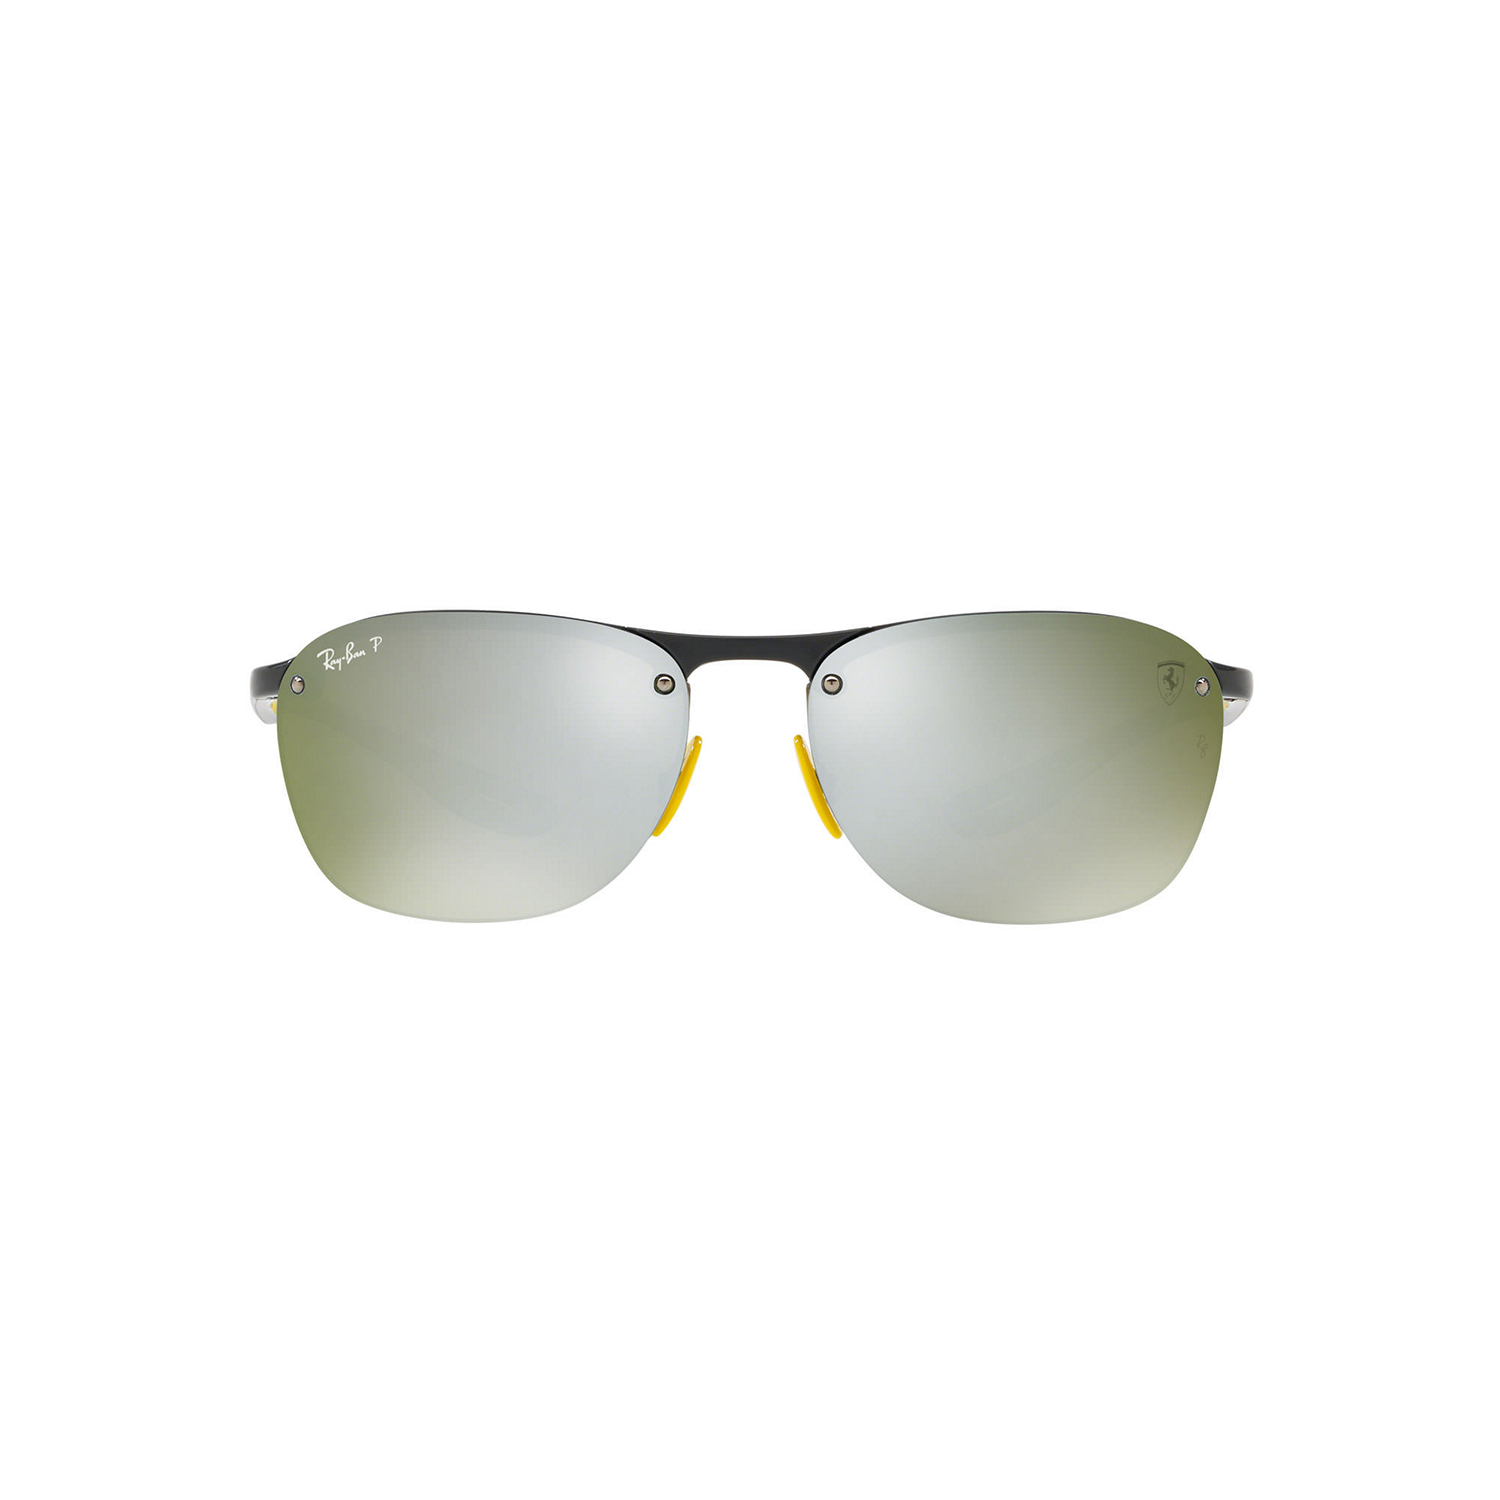 Irregular Sunglasses 0RB4302M